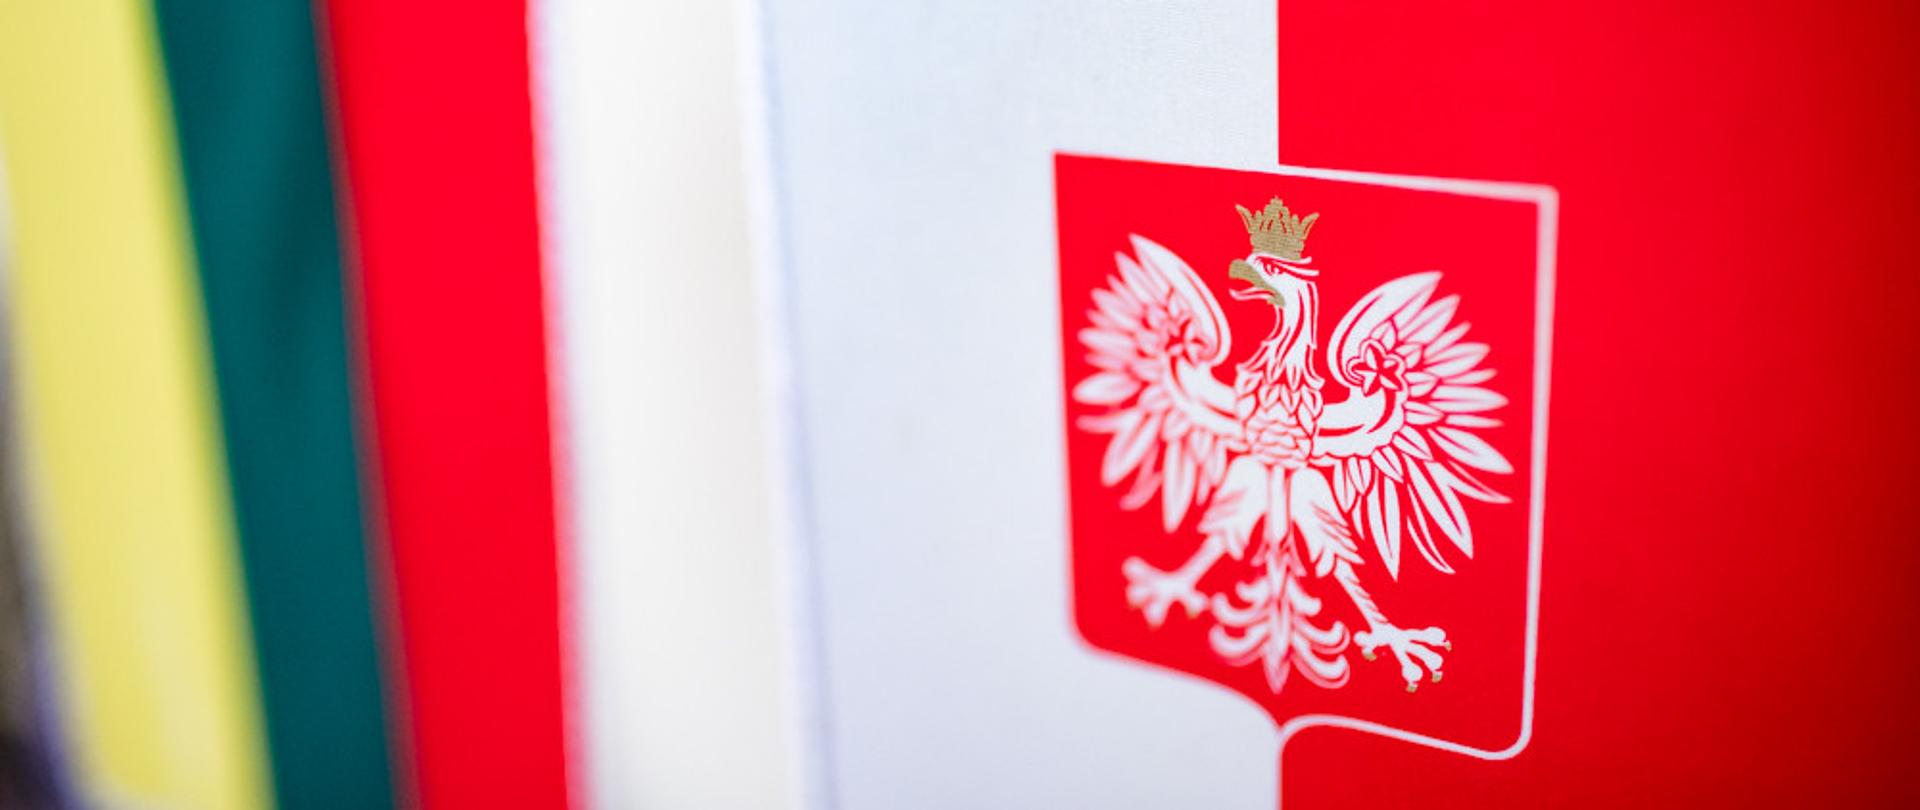 Flaga polska z godłem, po lewej flaga Litwy.